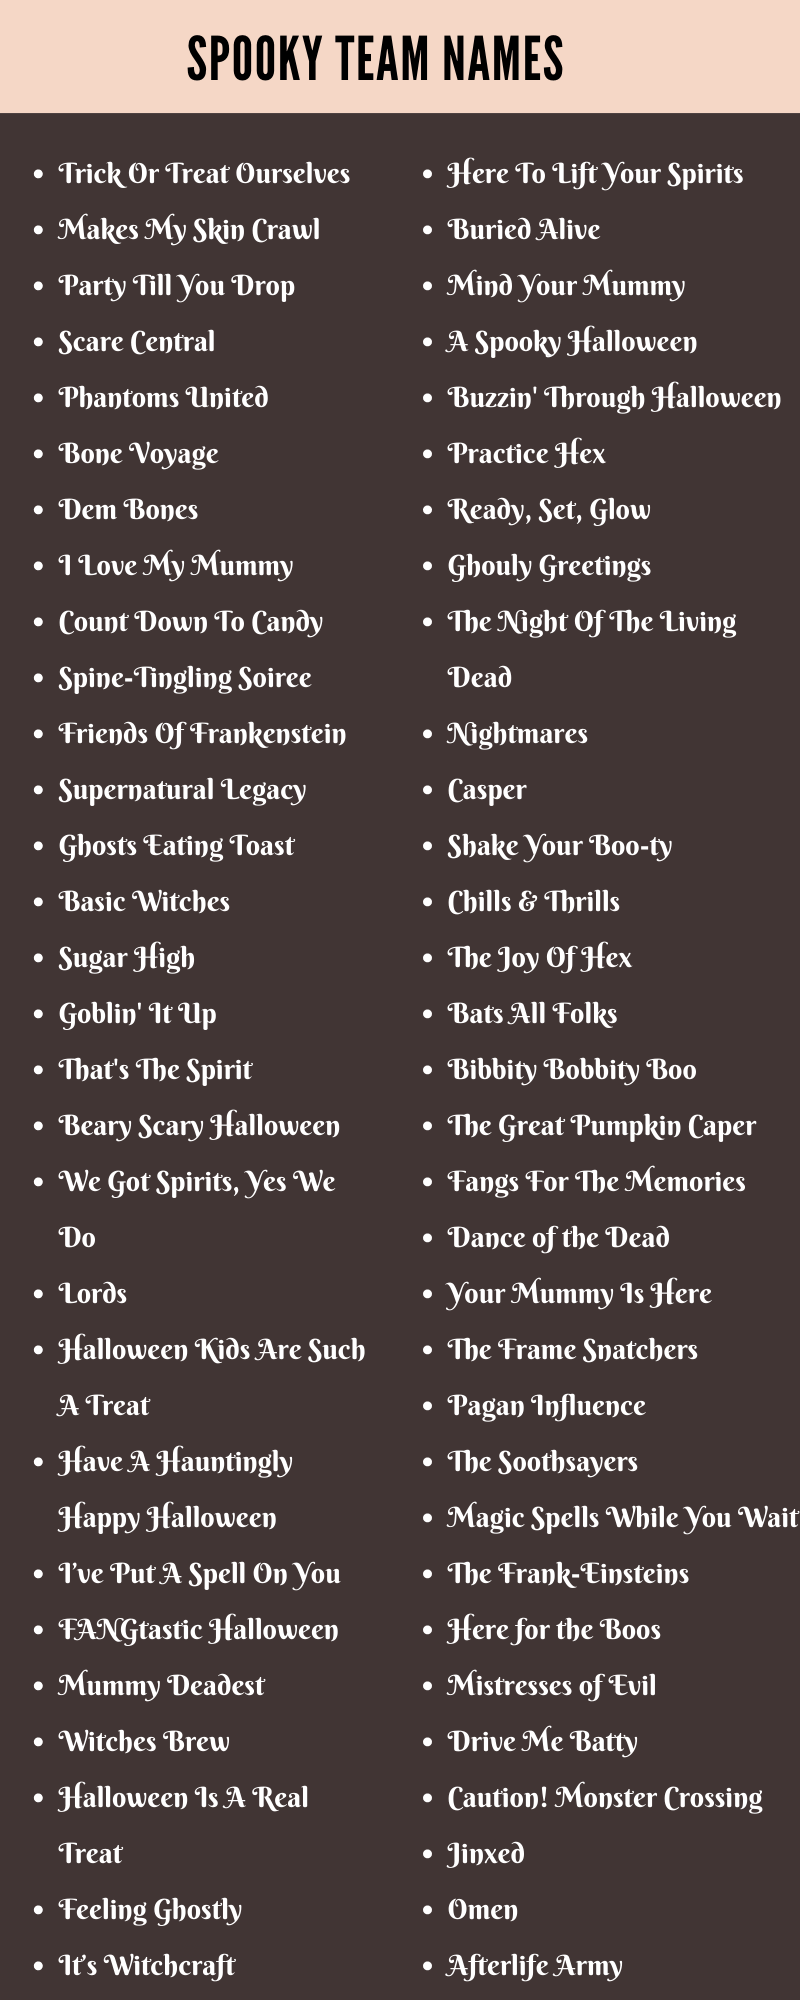 Spooky Team Names